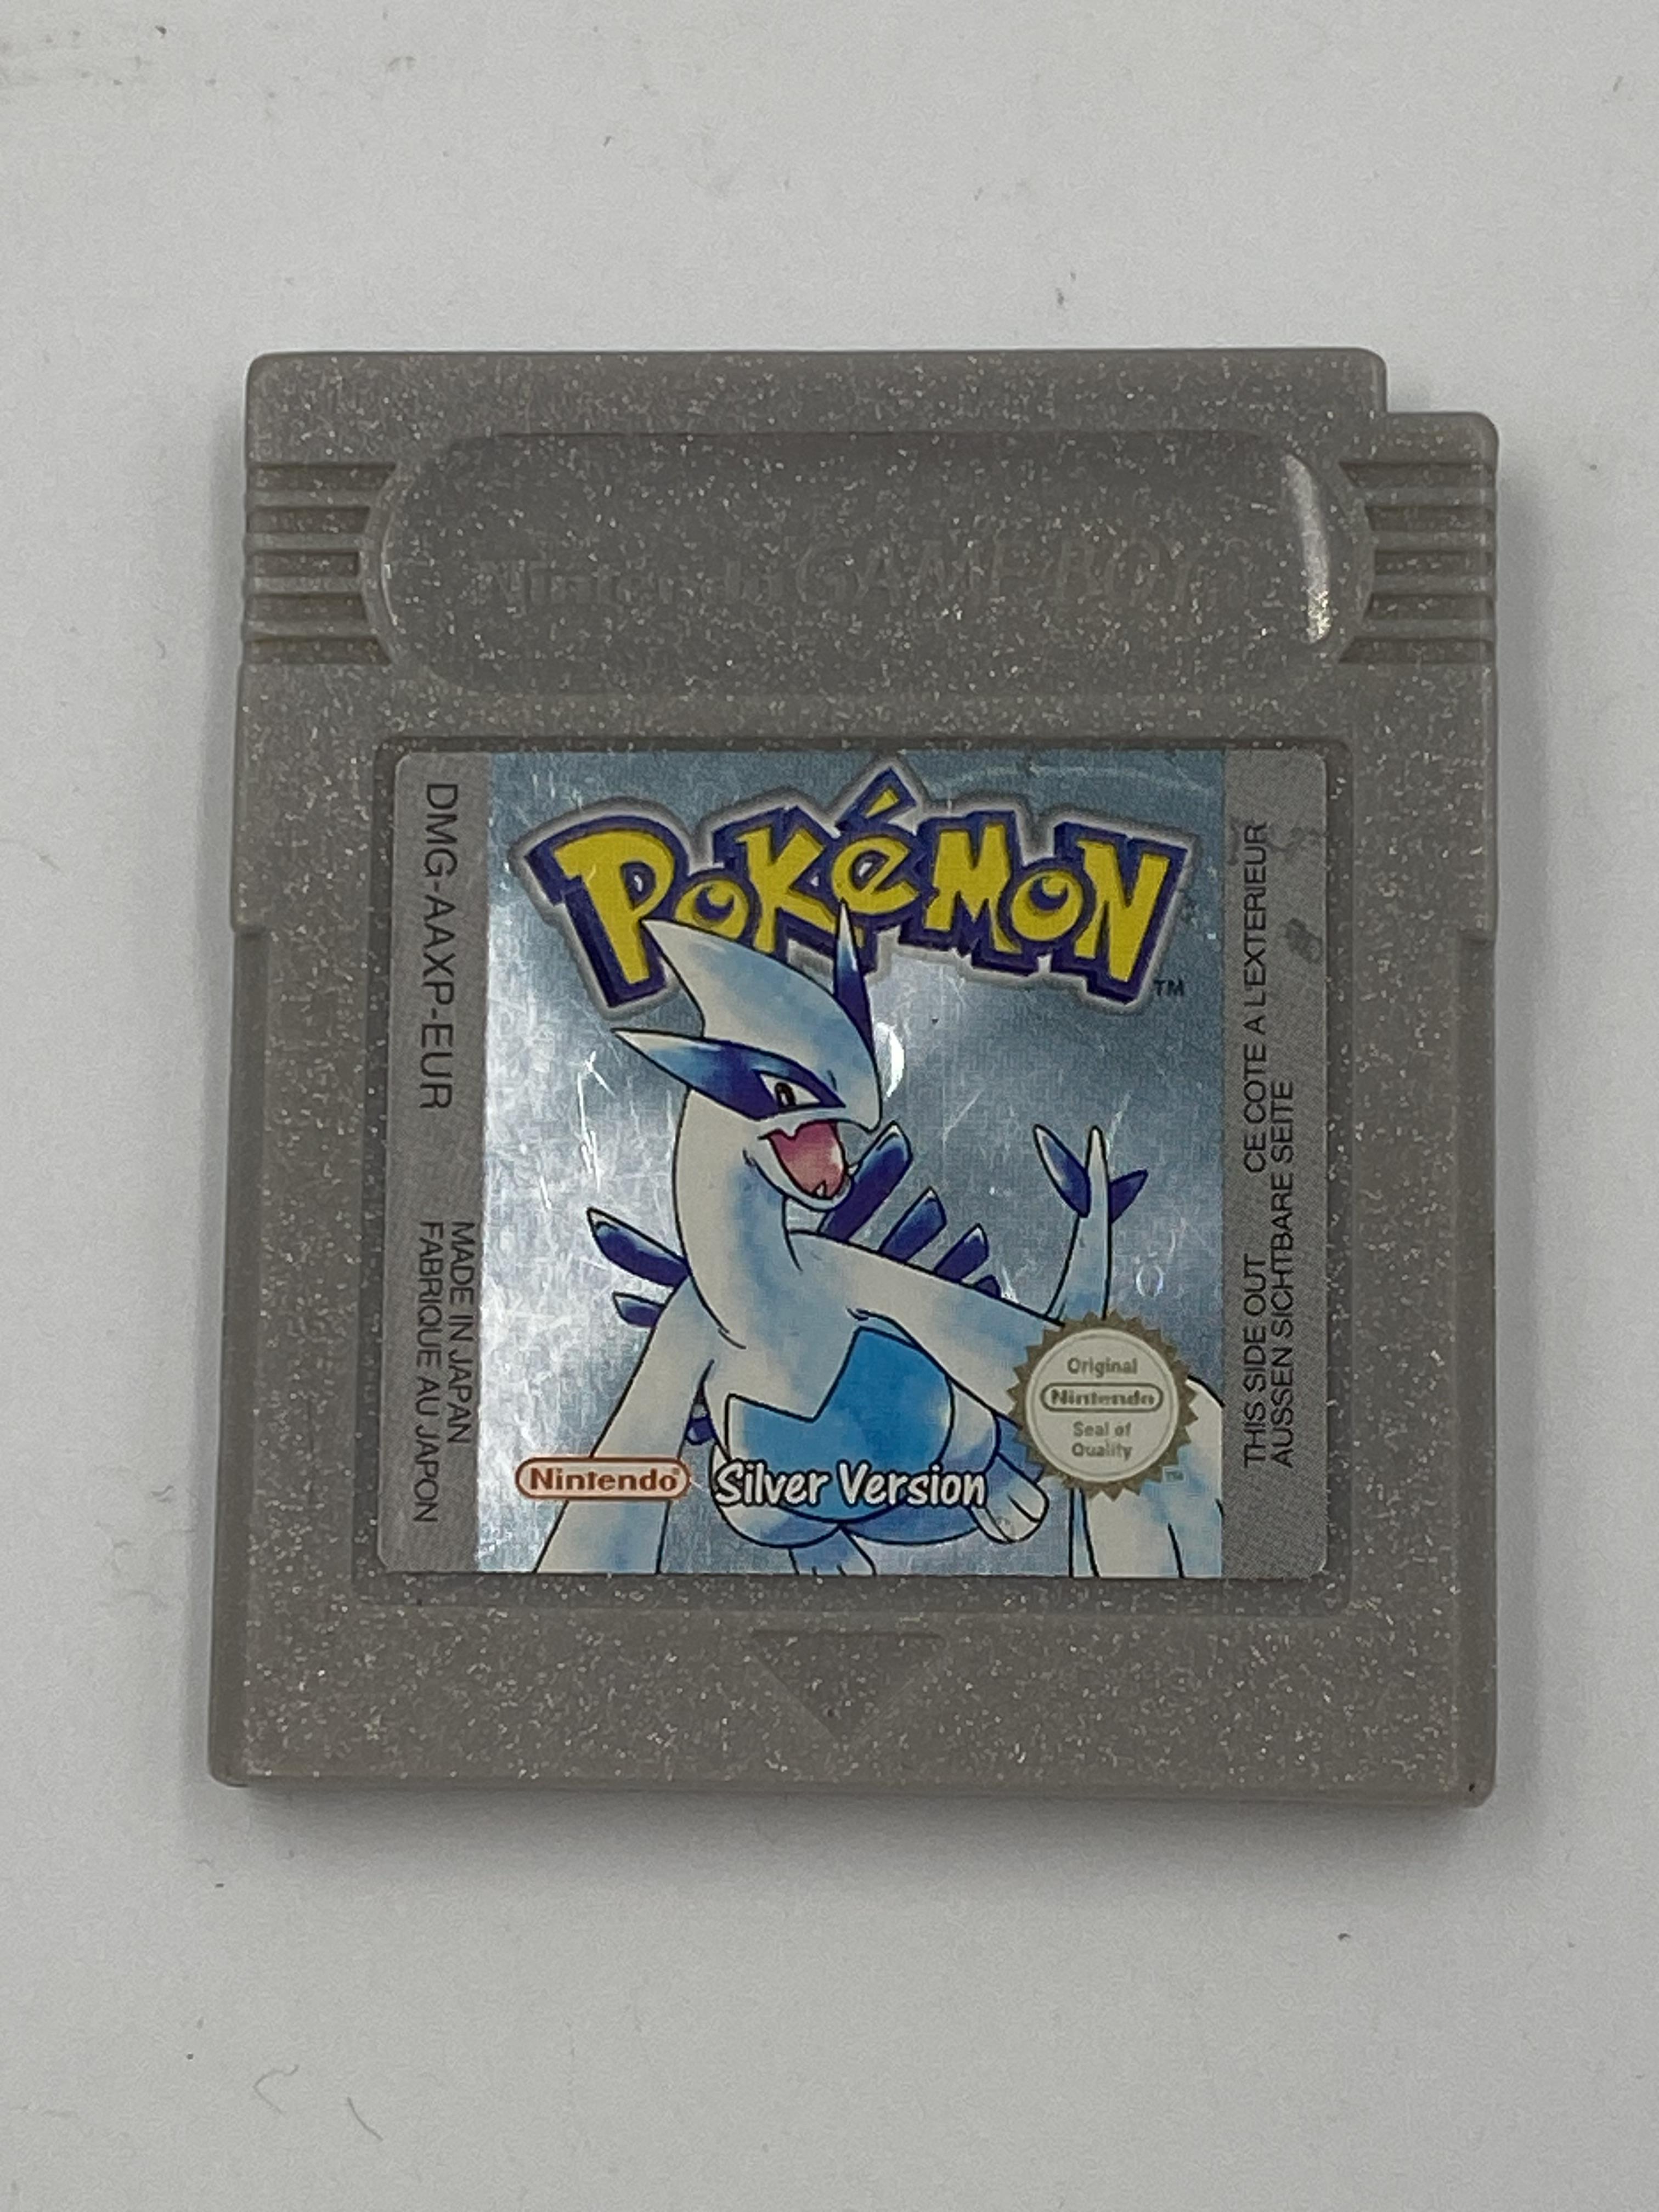 Nintendo Game Boy Pokemon Silver Version - Image 2 of 2